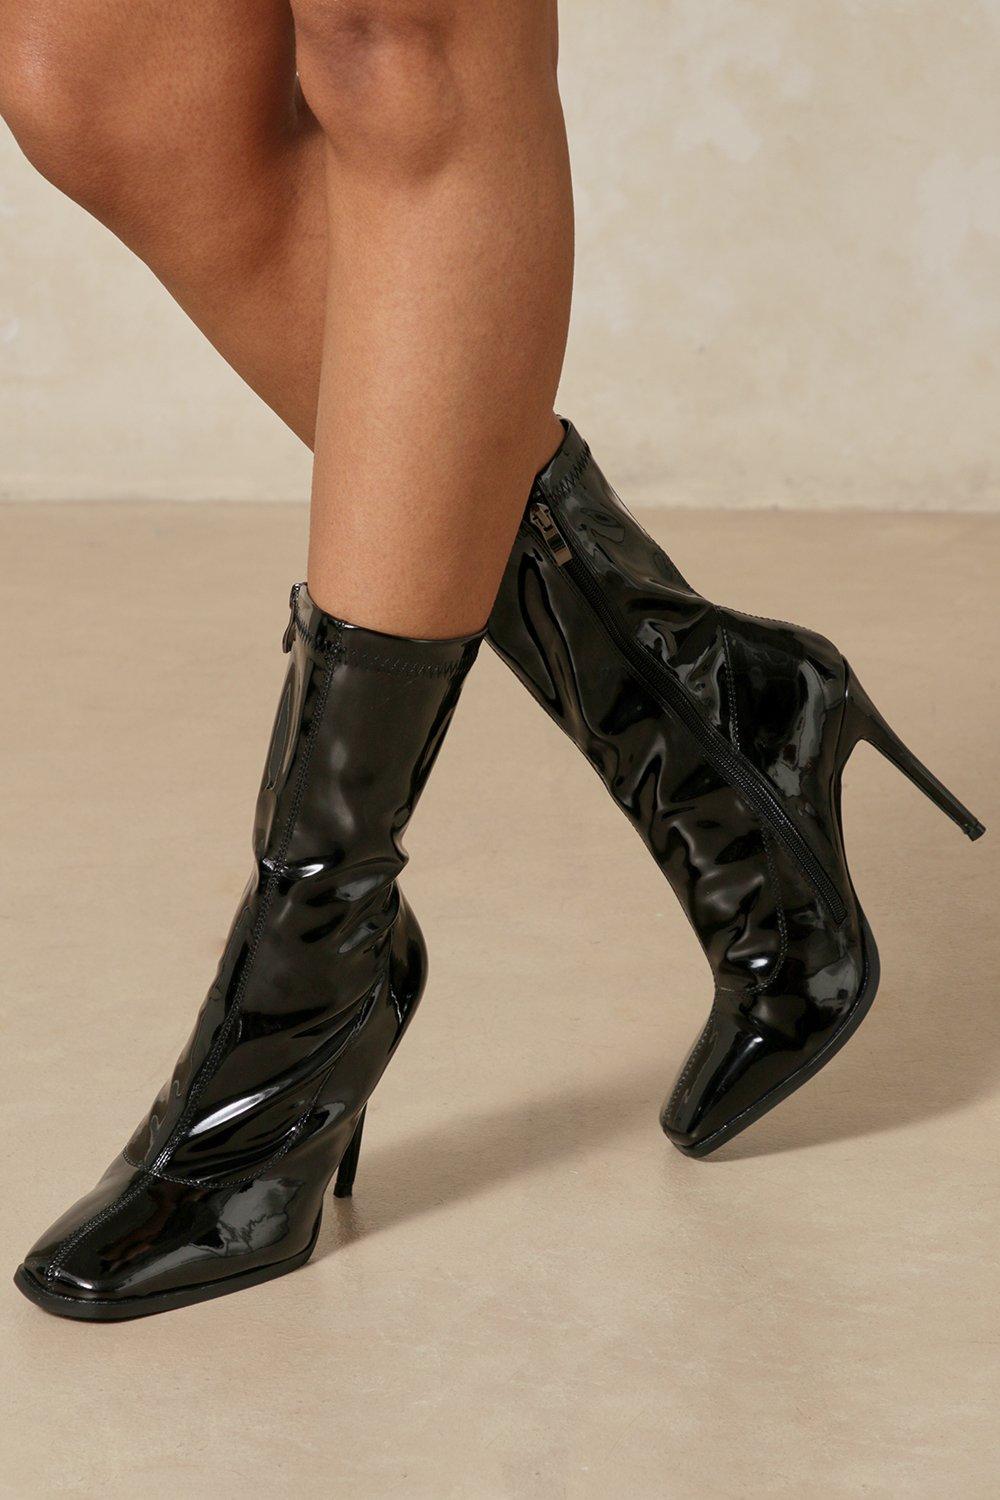 Womens Patent Square Toe Ankle Boots - black - 4, Black